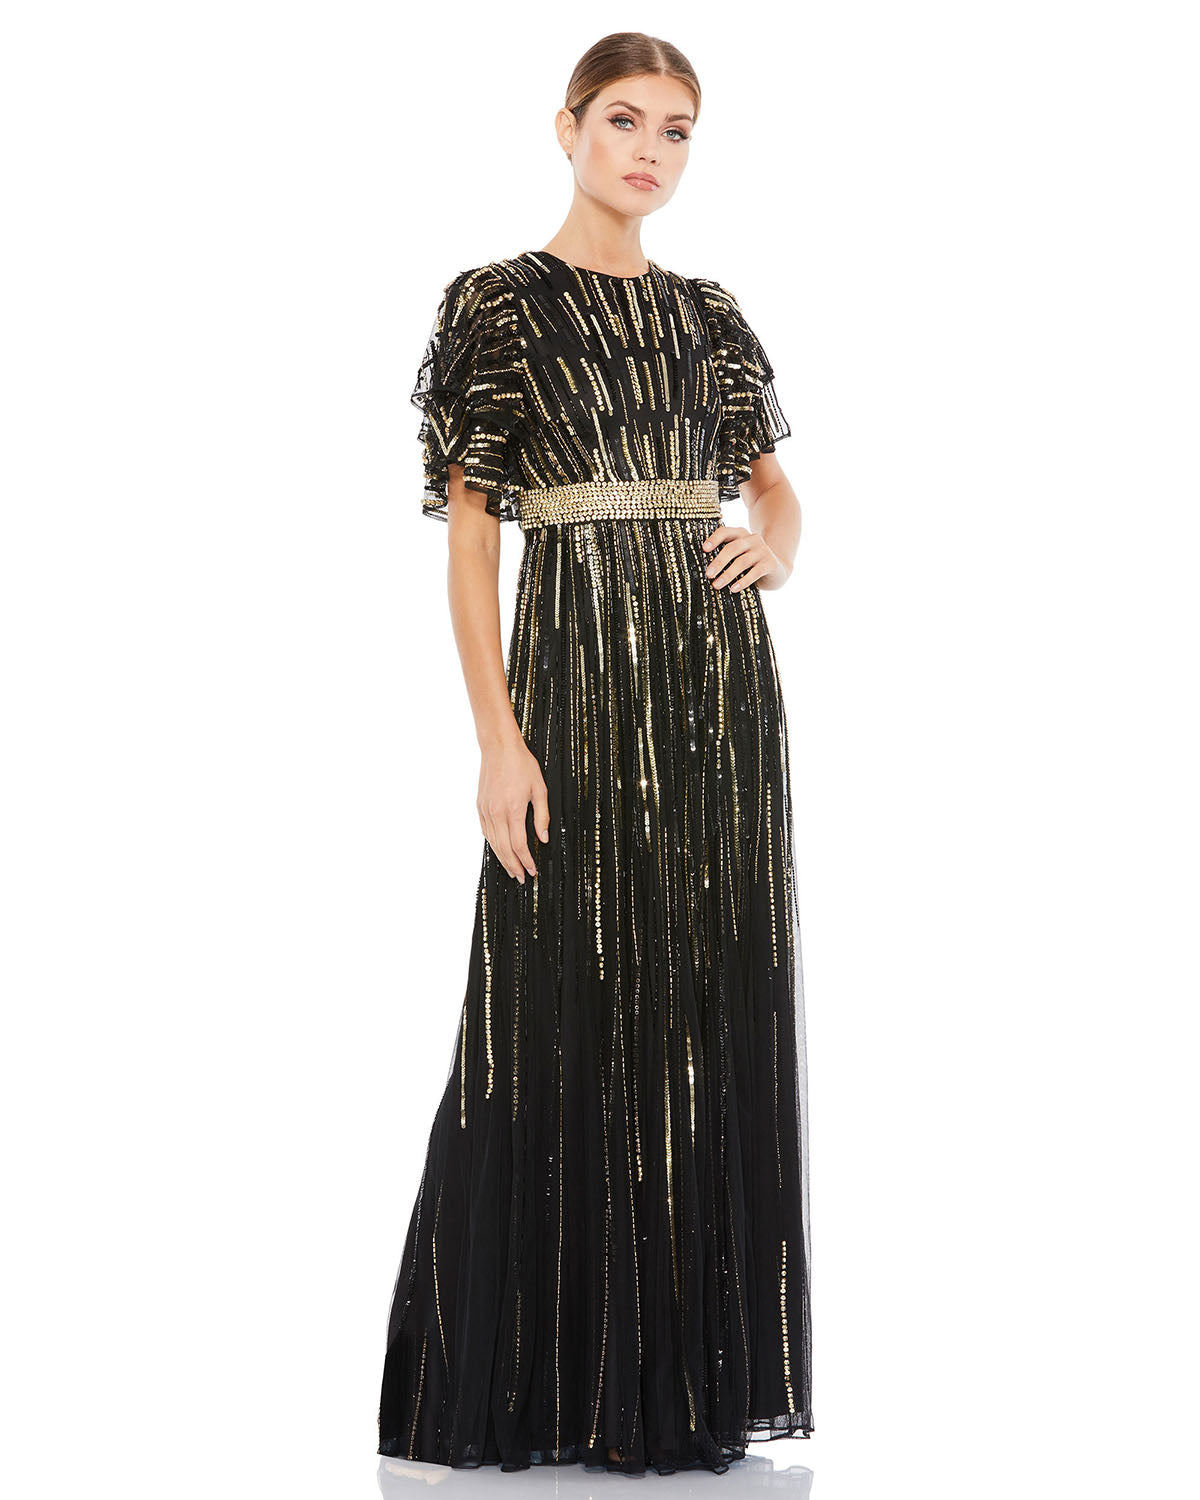 Embellished Full Length Layered Sleeve Gown – Mac Duggal